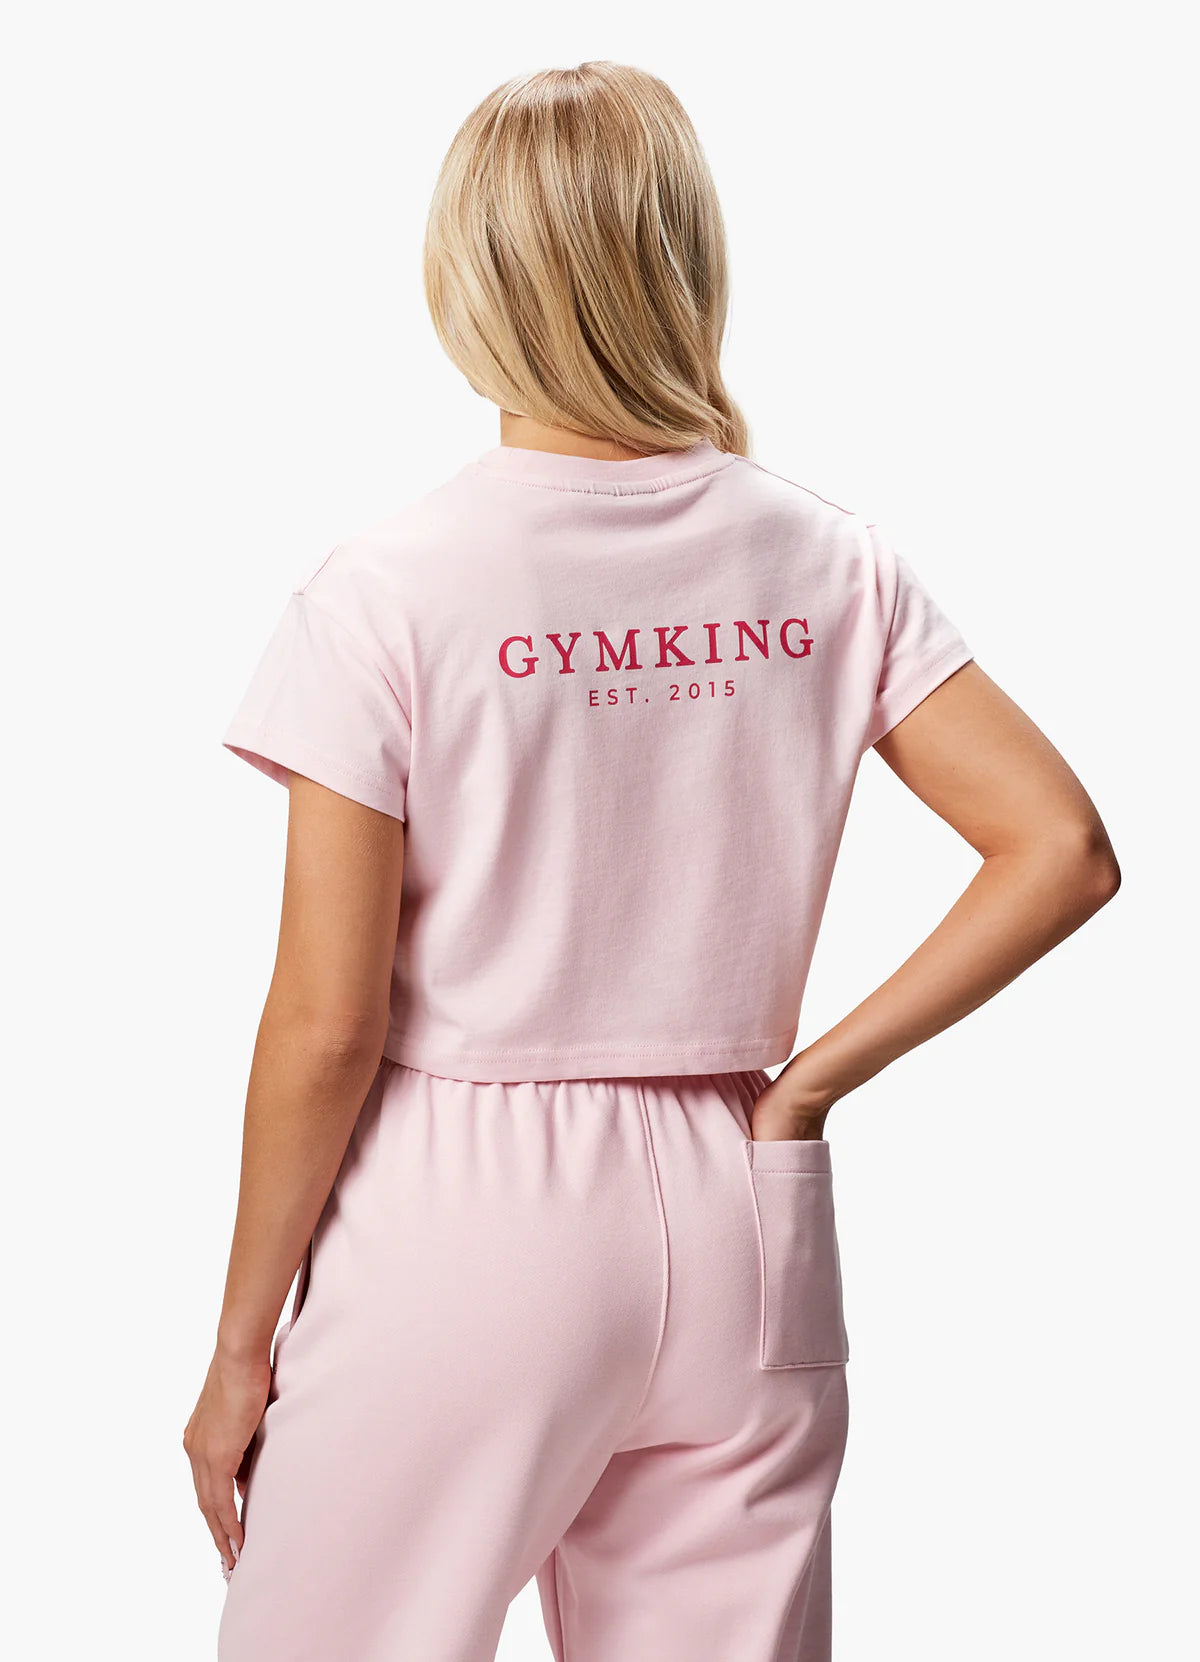 Gym King - Established Cap Sleeve Tee - Candyfloss Pink - uptowngirlhu